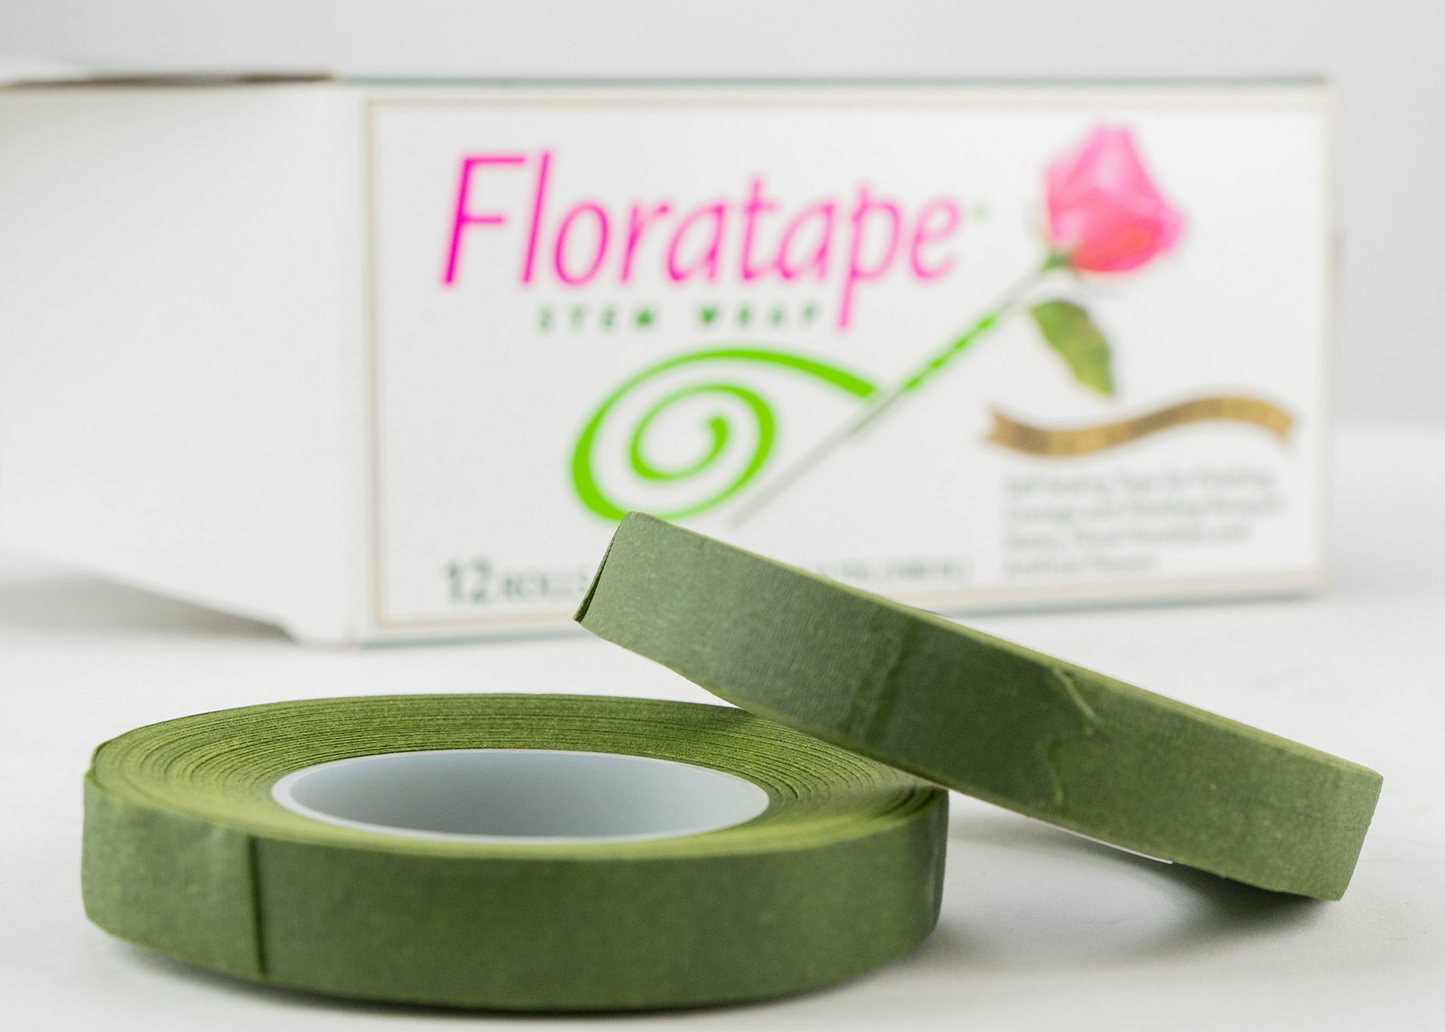 Floral tape Stemwrap - 1/2" 30 yd moss